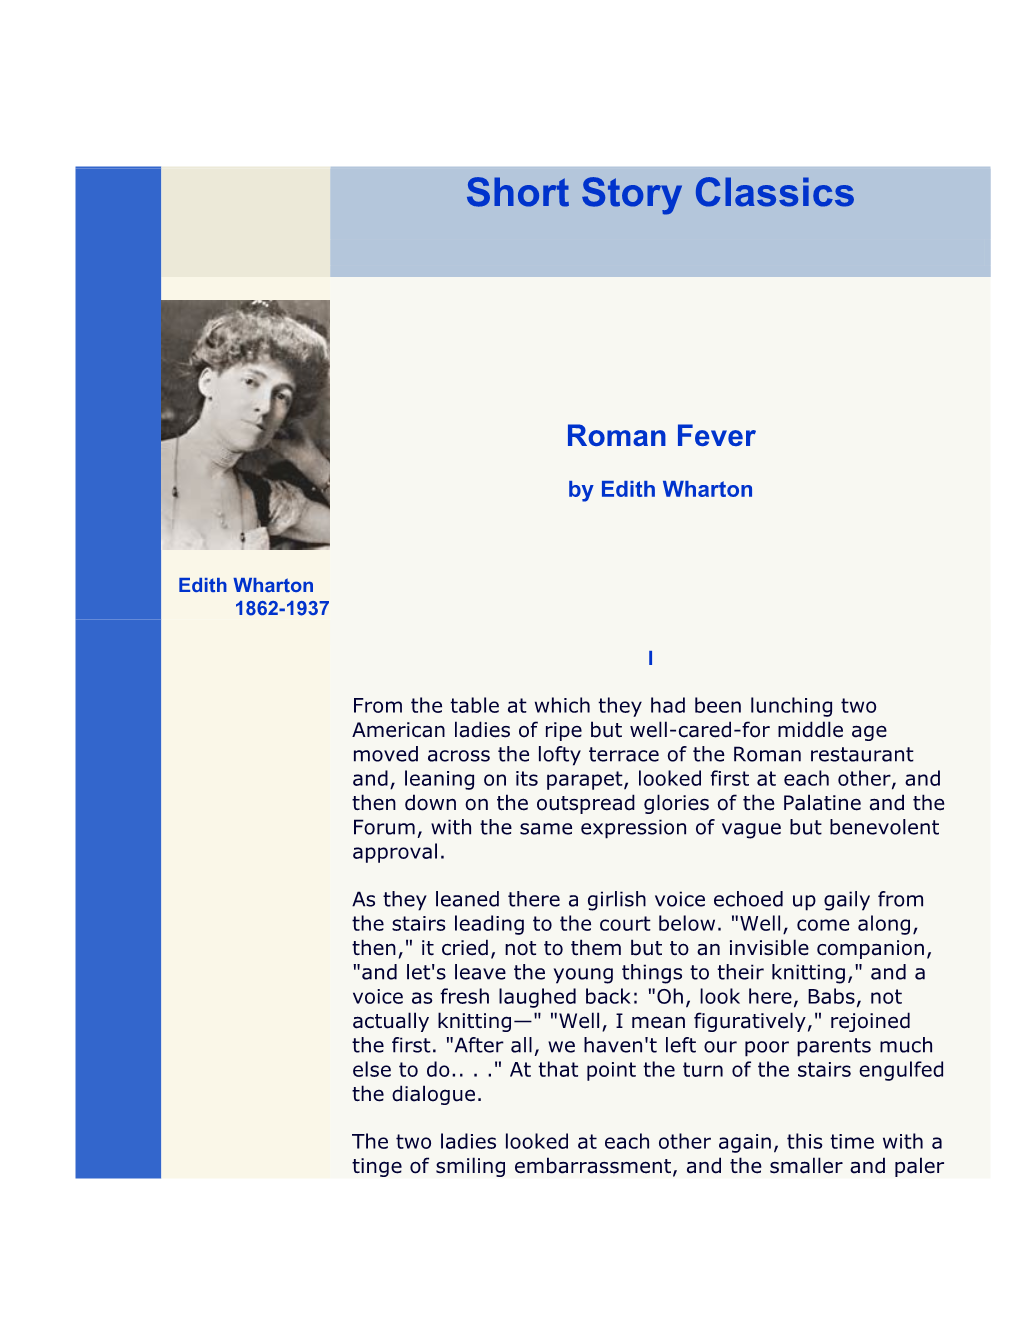 Short Story Classics s1